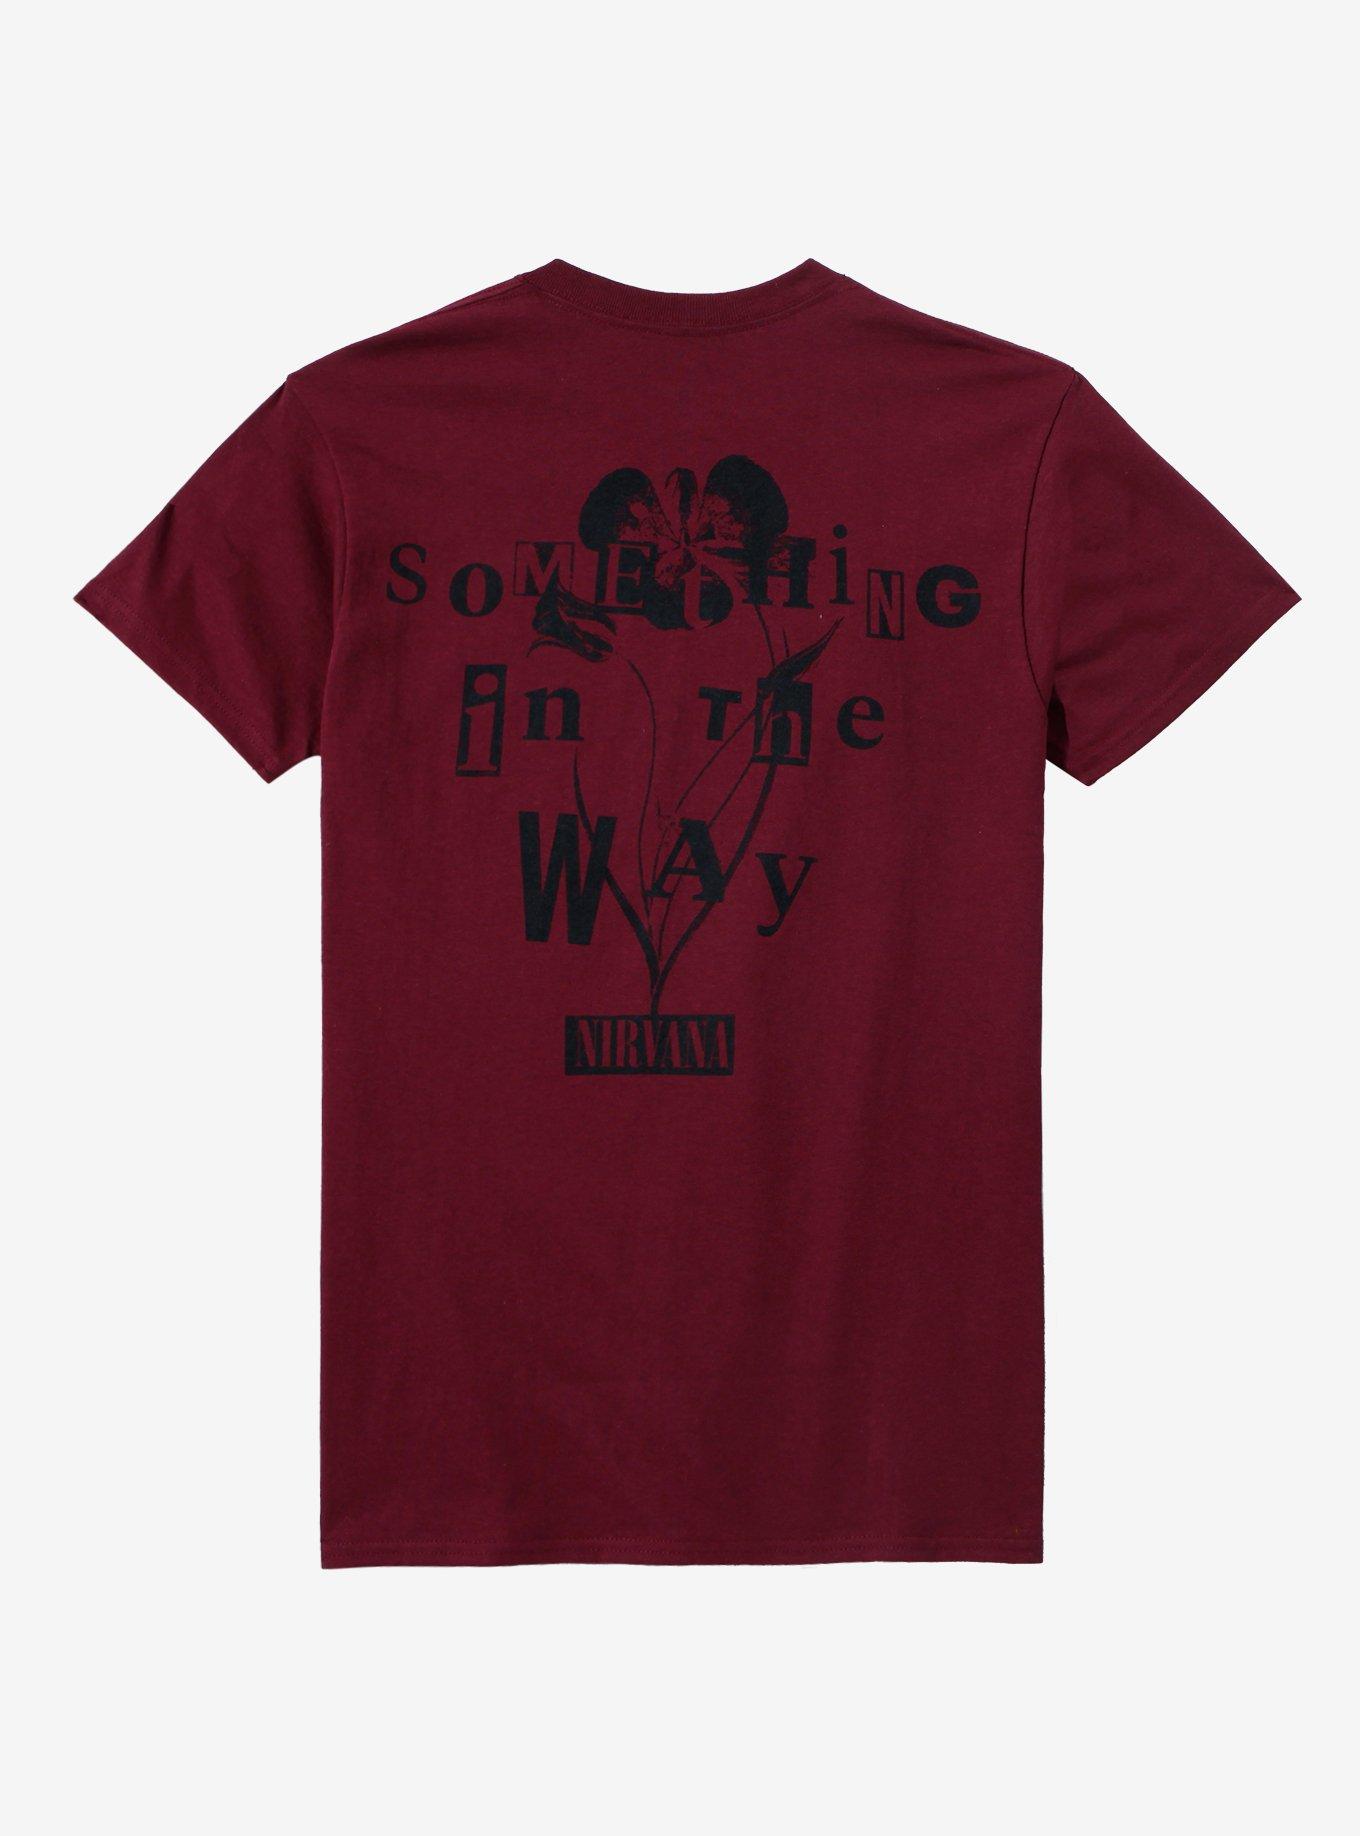 Nirvana Something The Way Boyfriend Fit Girls T-Shirt